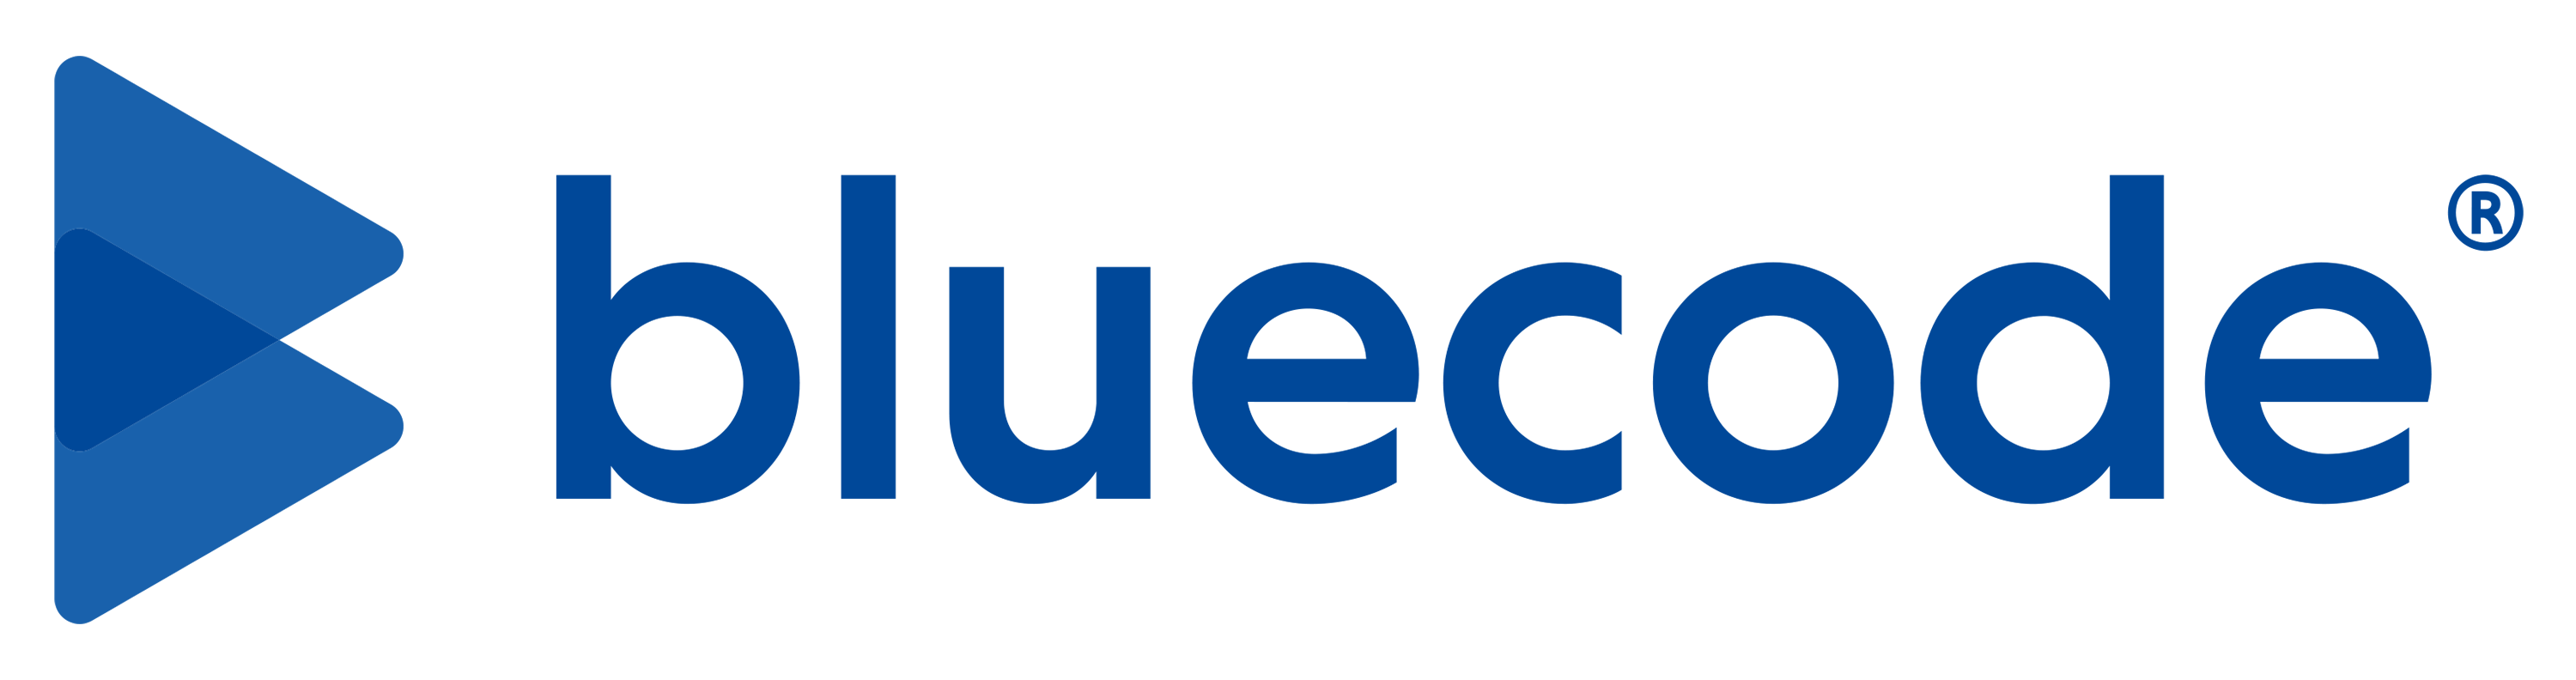 bluecode logo web blue blue